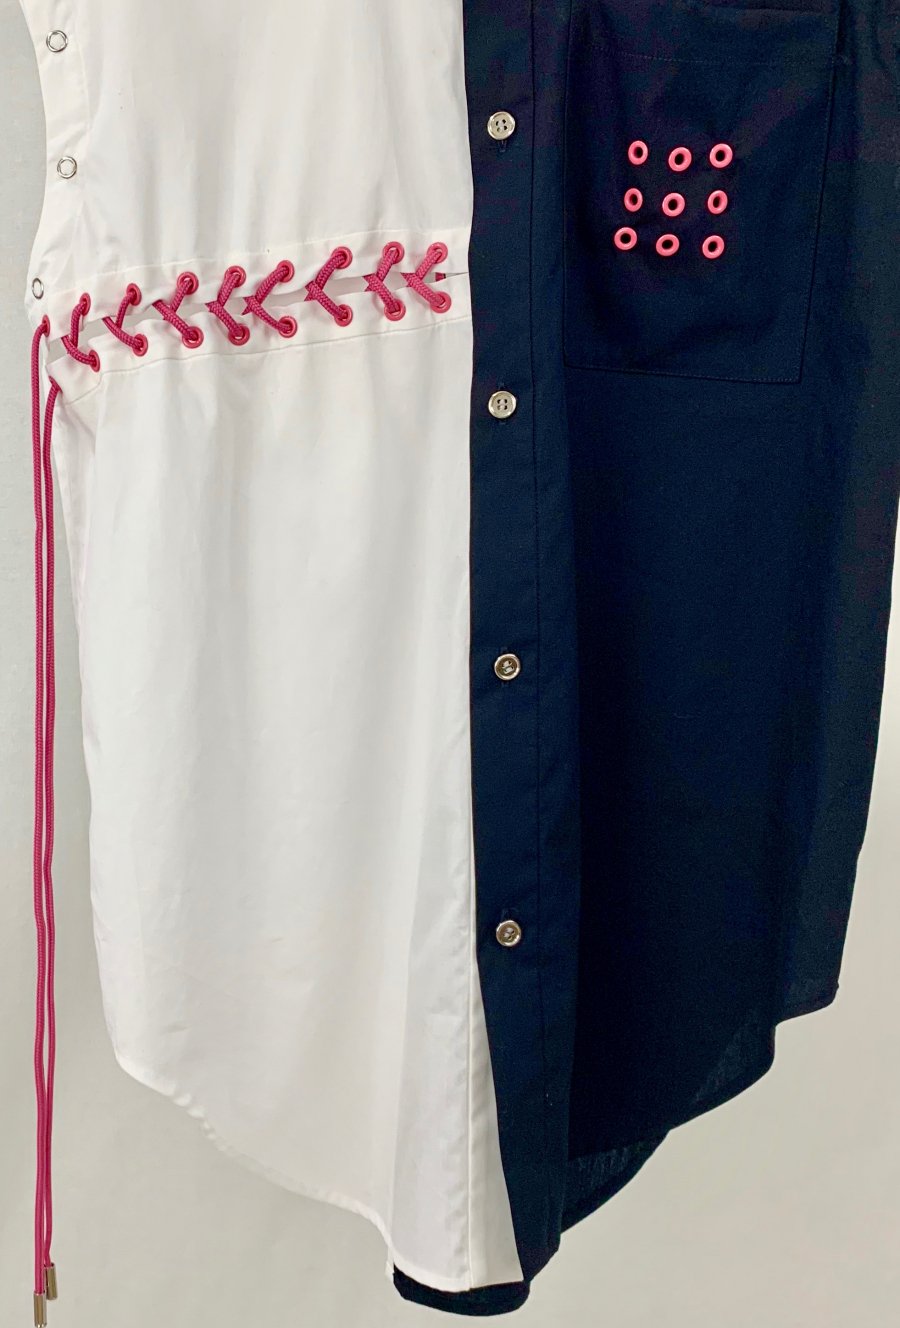 SYU.HOMME/FEMM  Bi-color Short sleeve shirts（Wht&Blk）